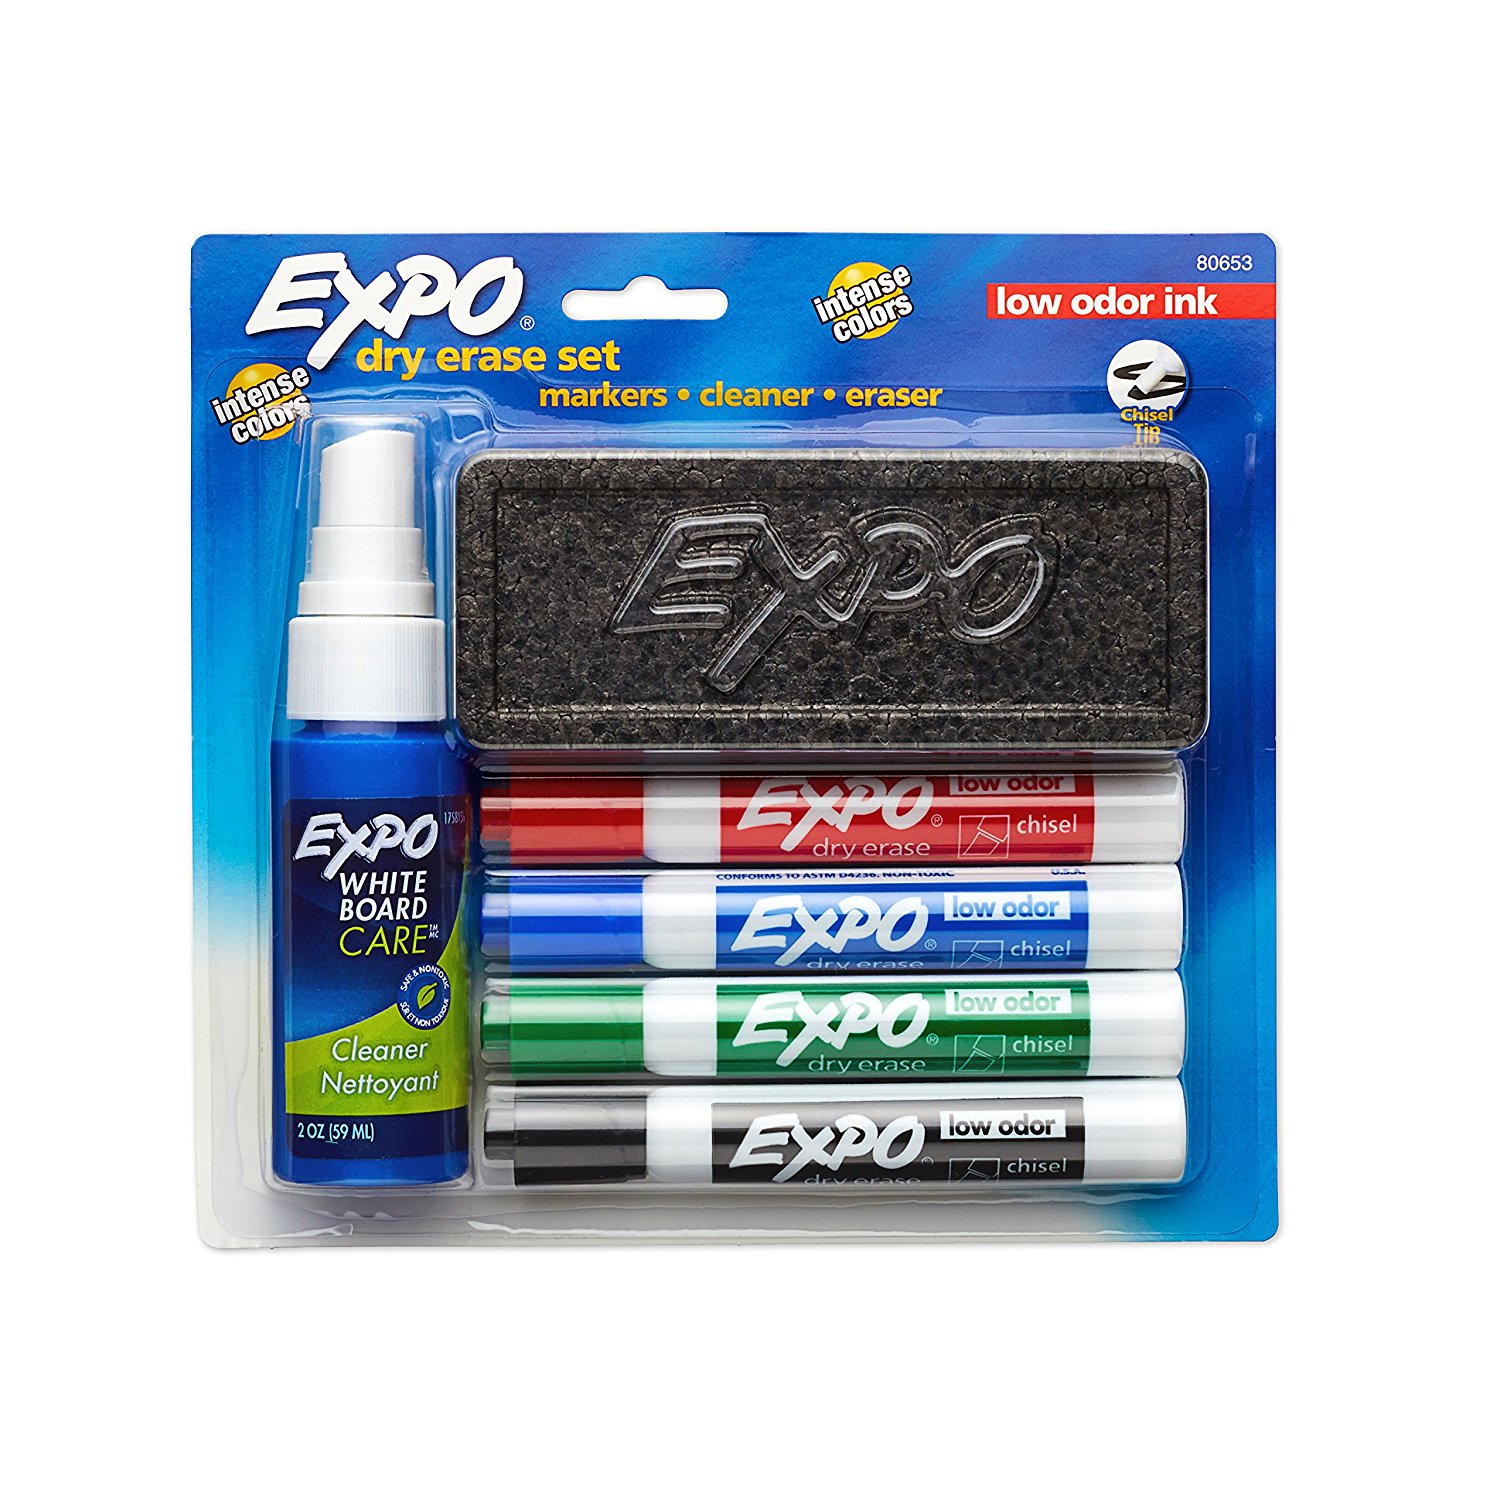 Expo Dry Erase Marker Set with Eraser and 2 Oz. Cleaner, Low Odor, Chisel Tip - Assorted Colors - 4/Set